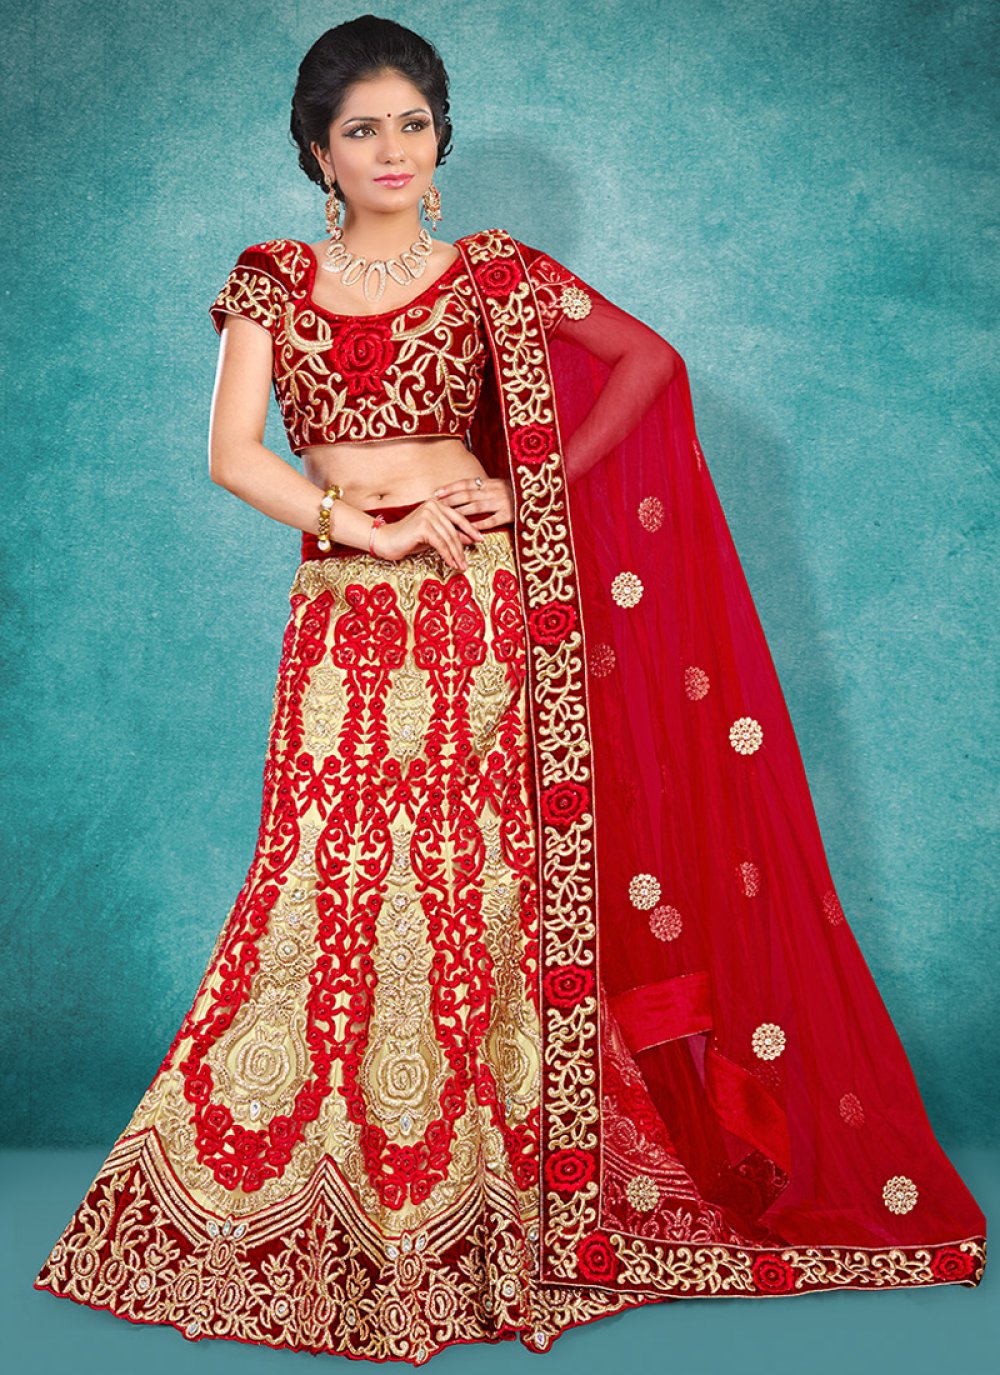 35 Trending Indian Bridal Lehengas For This Wedding Season